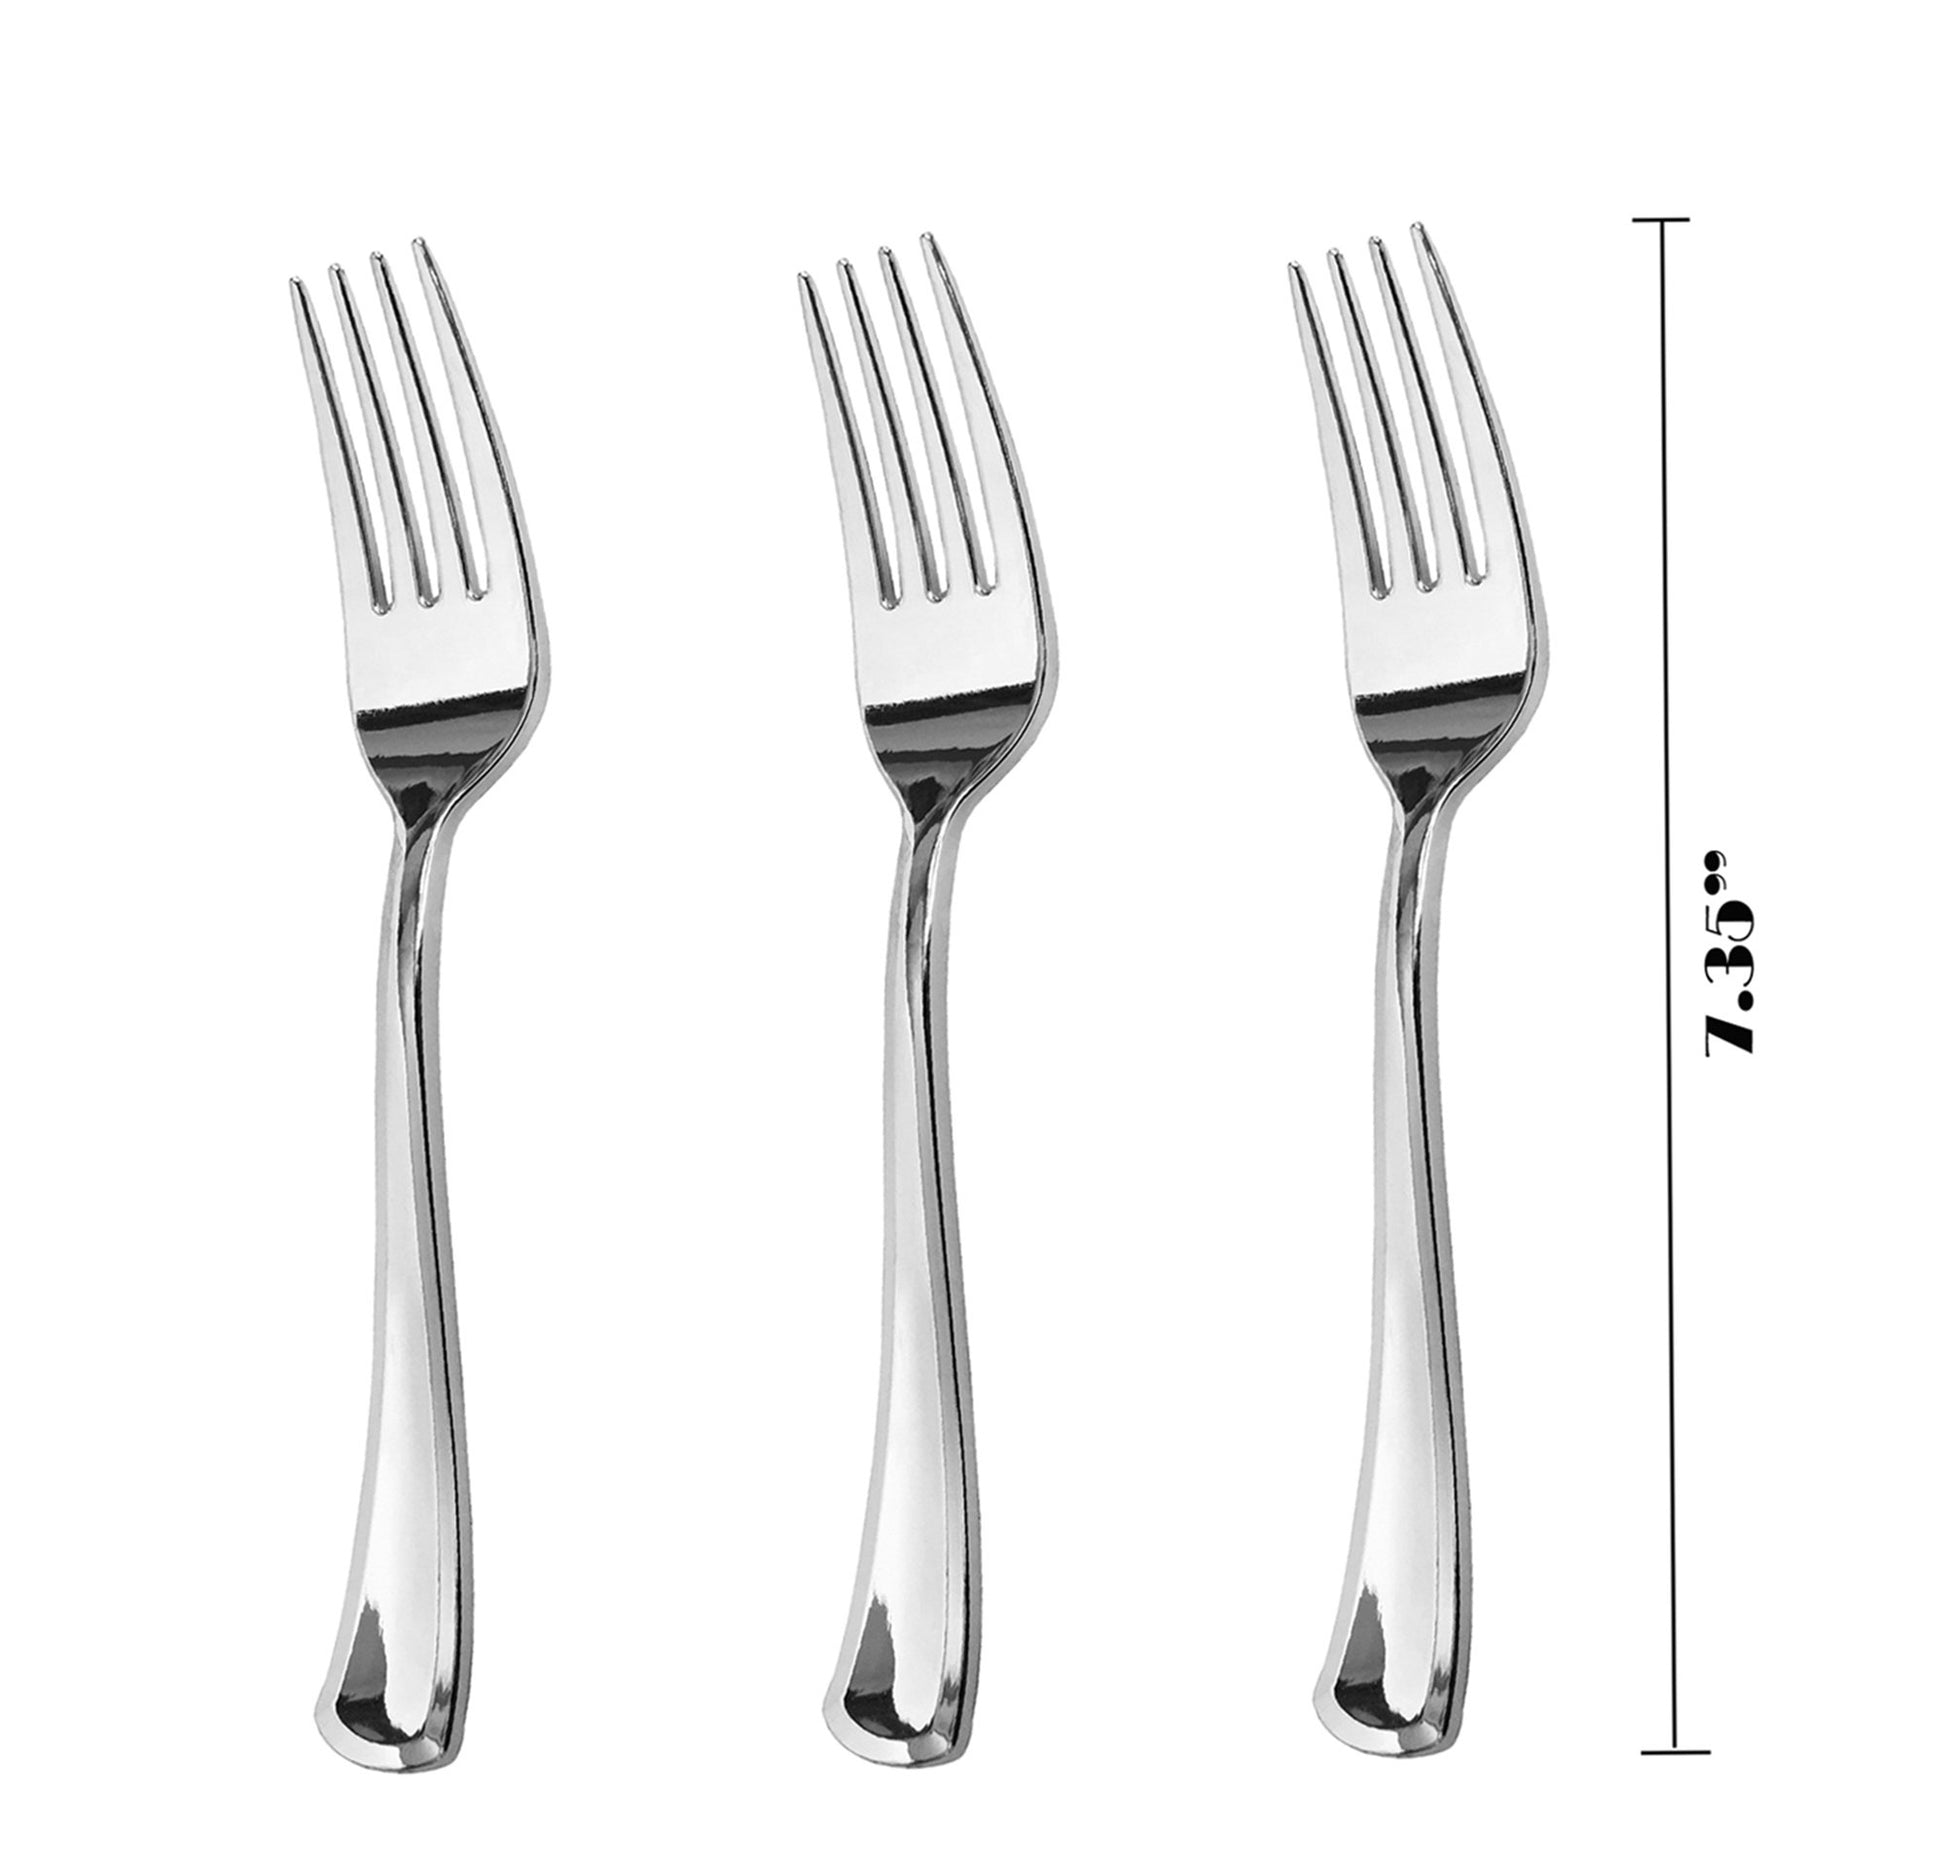 JL Prime 300 Silver Plastic Silverware Set, Silver Plastic Cutlery Set for  Party & Wedding 100 Plastic Forks, 100 Plastic Spoons, 100 Plastic Knives